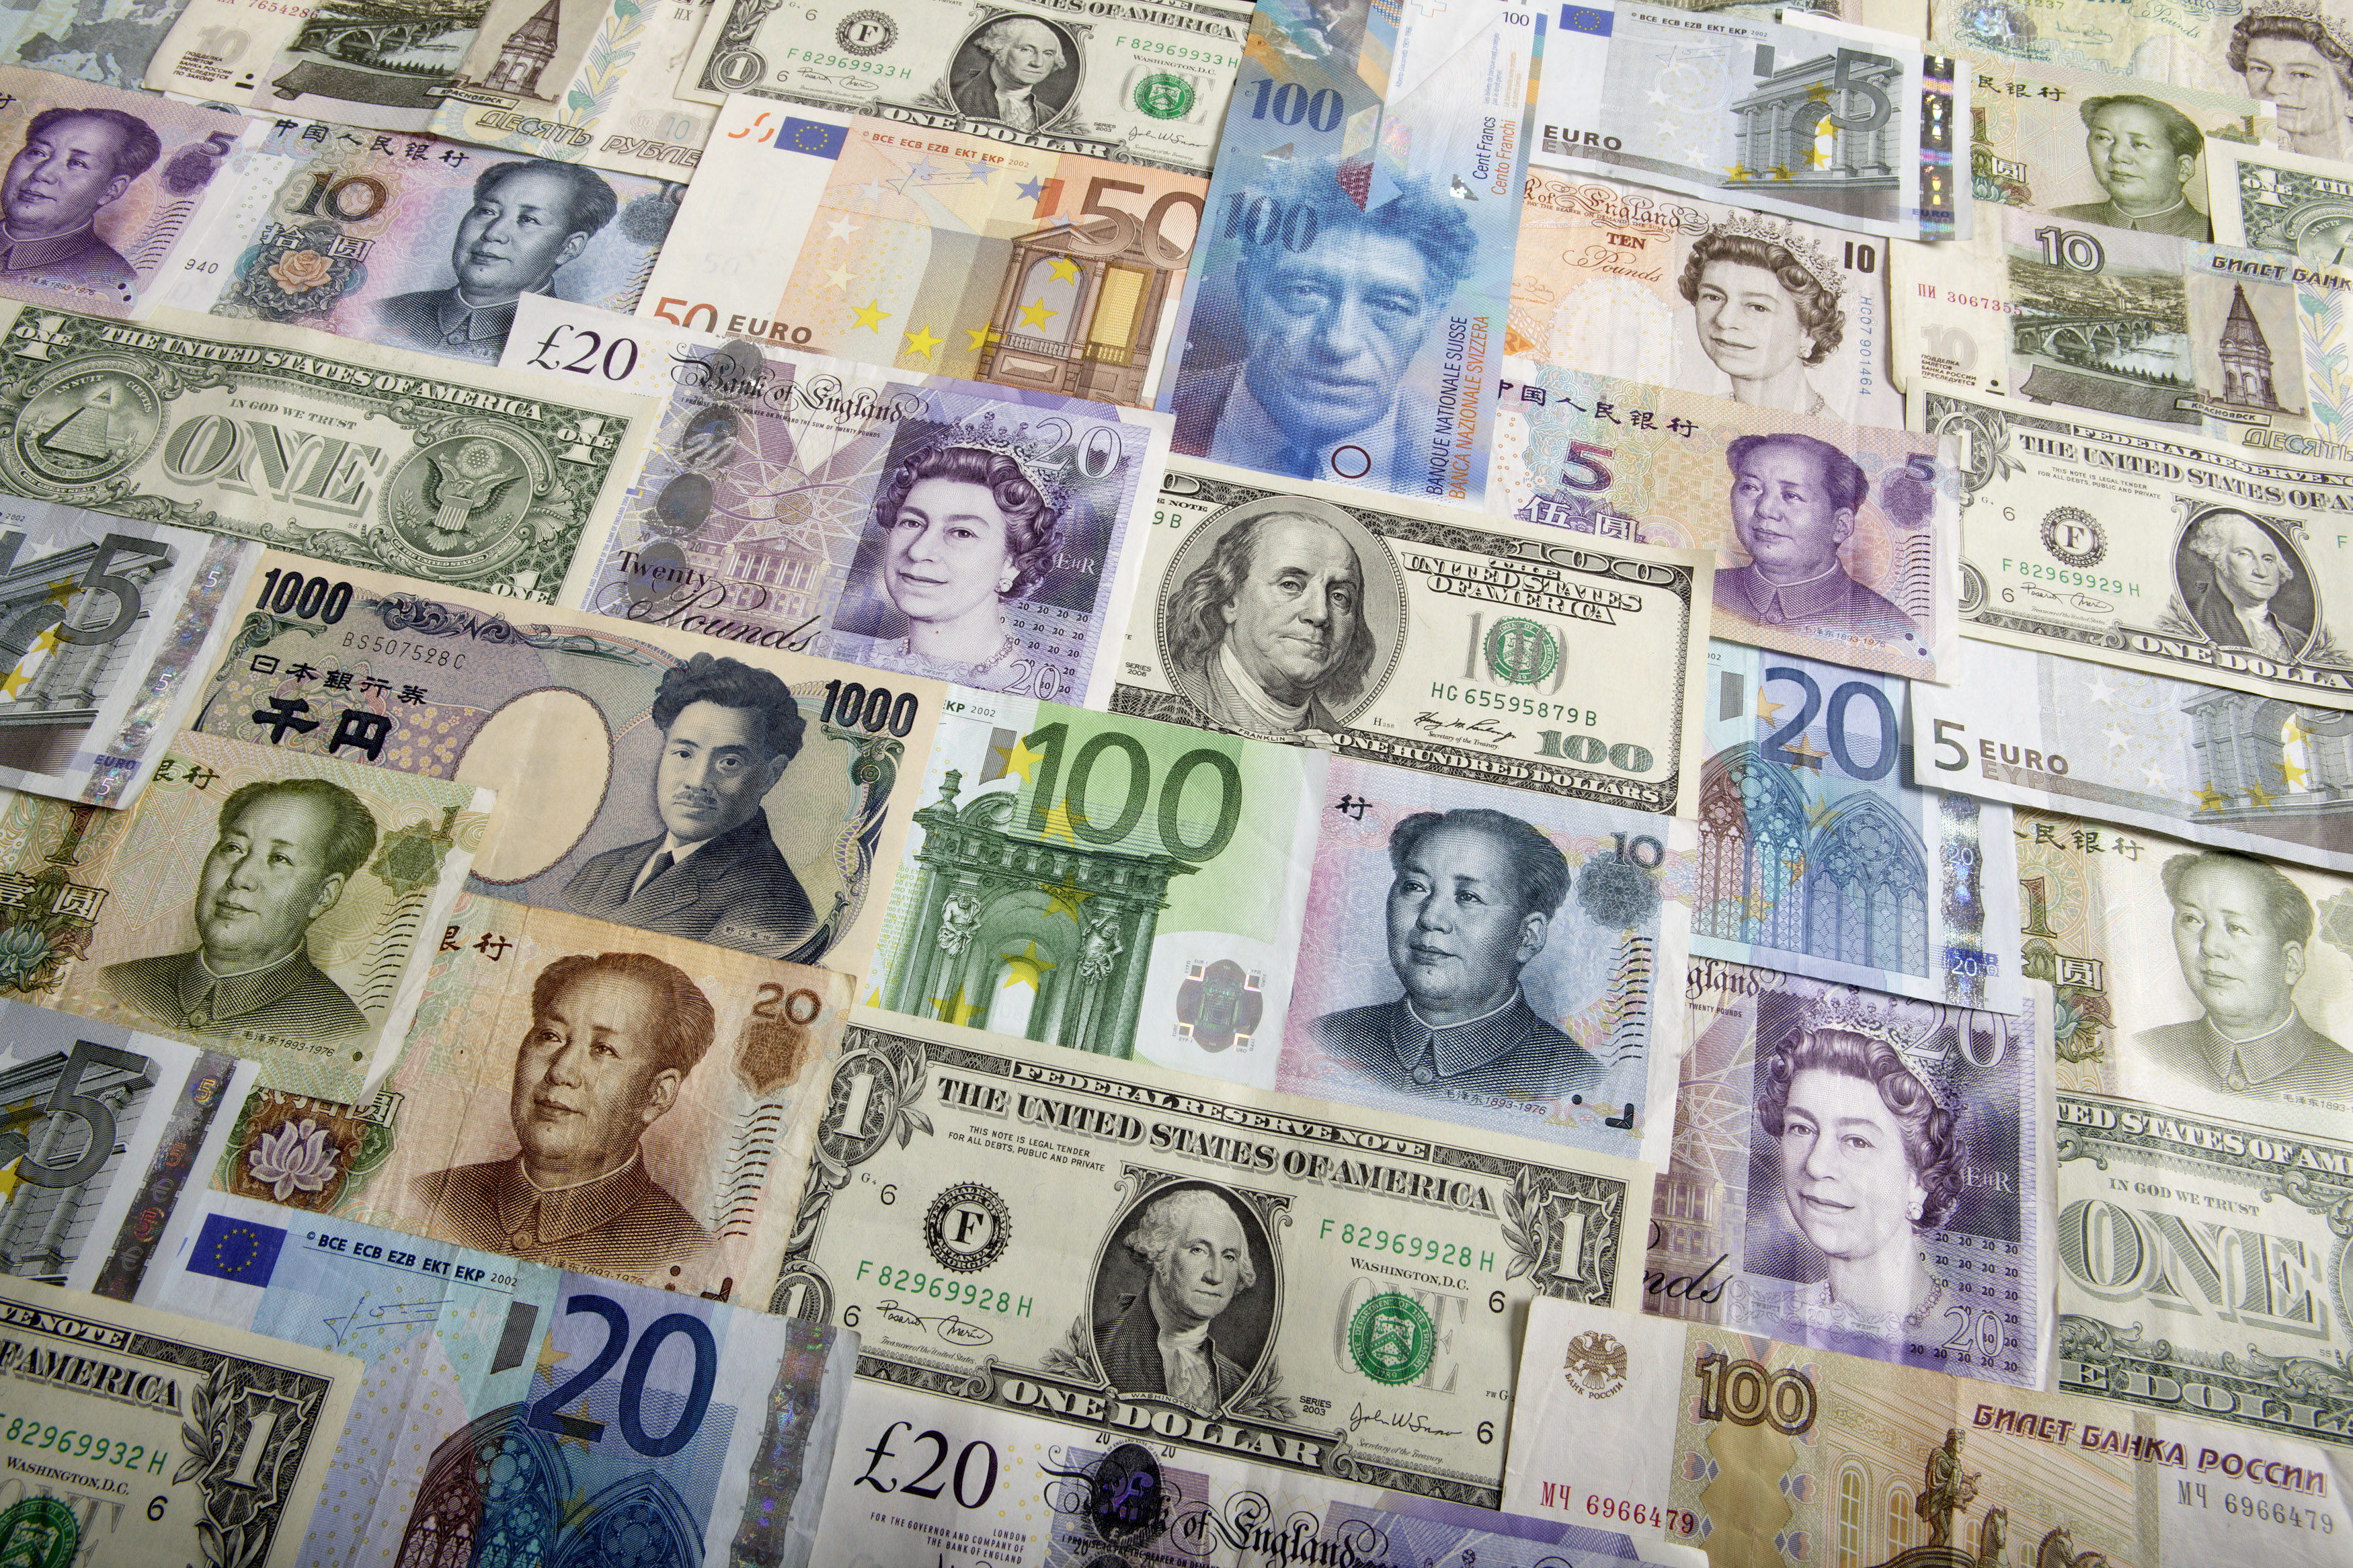 Фунт рубль доллар. Разные валюты. Иностранная валюта. Деньги разные валюты. Разные купюры.